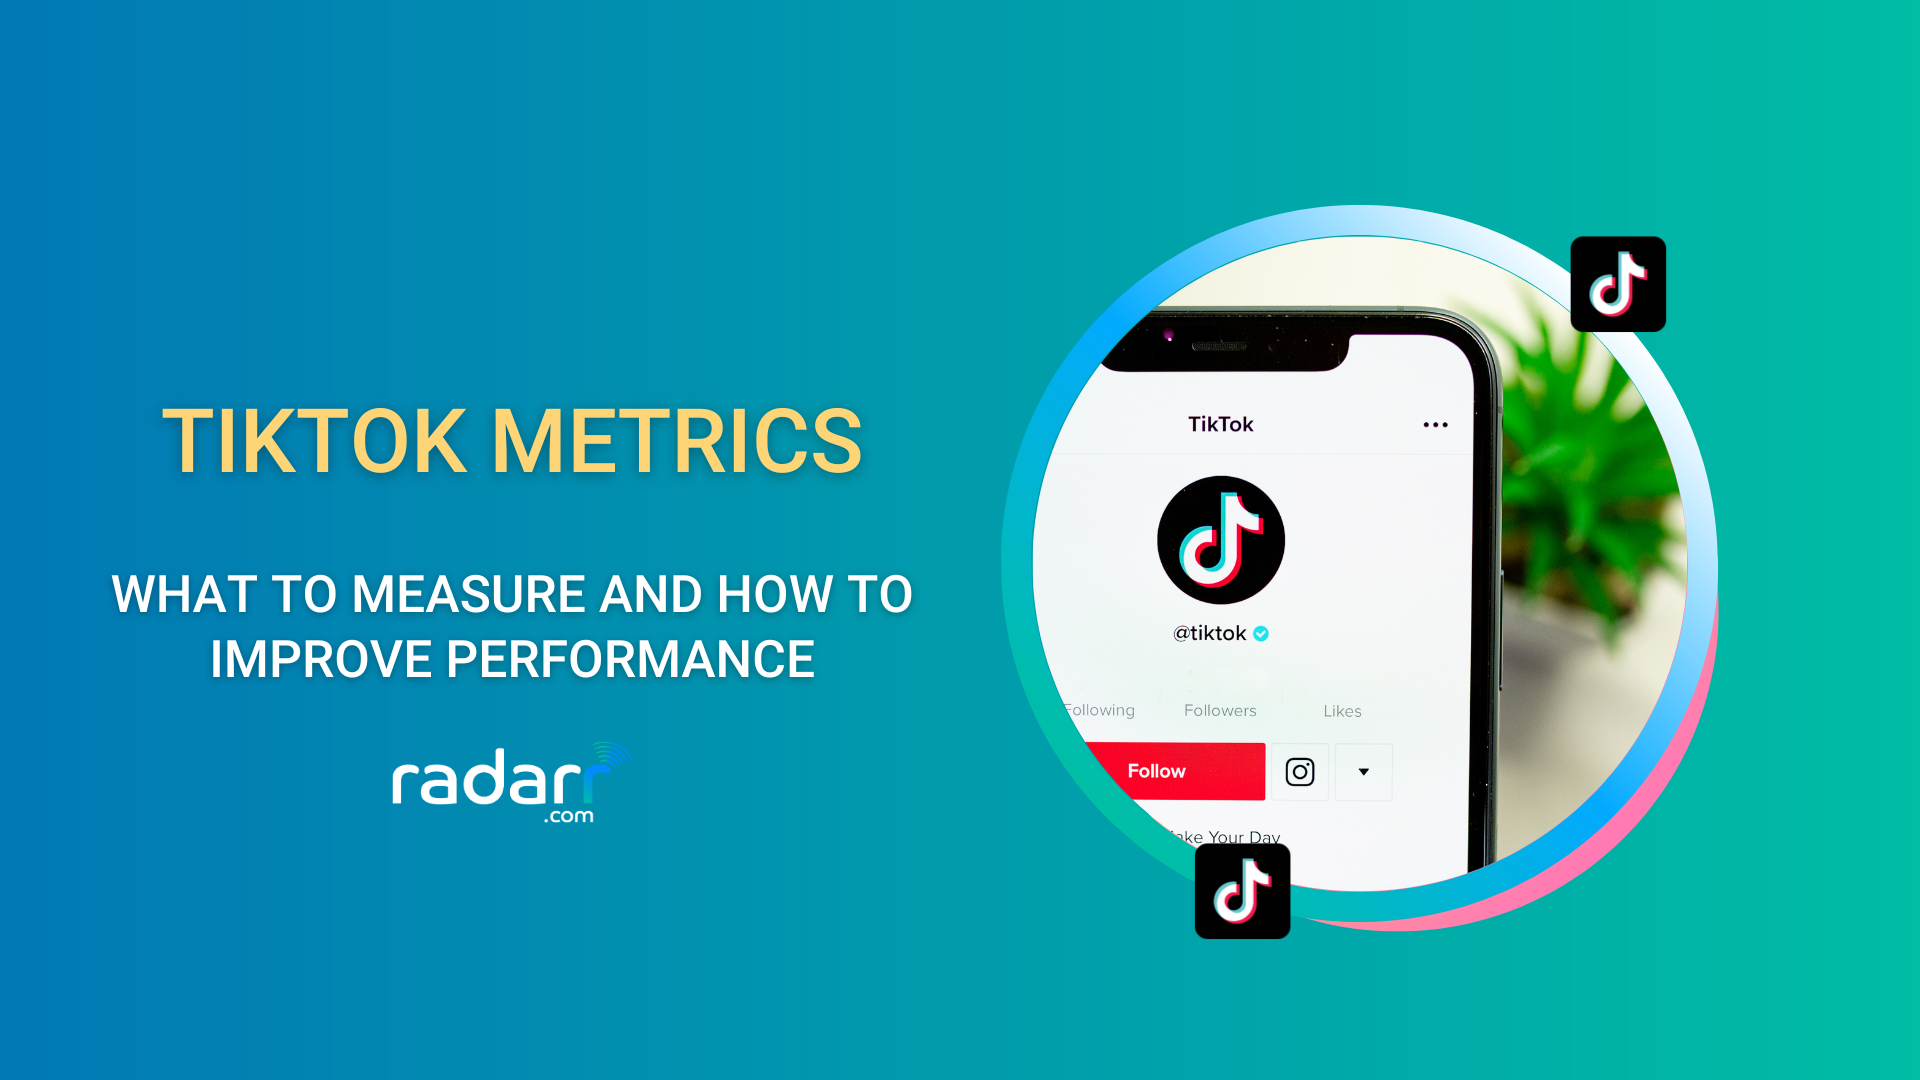 tiktok metrics to measure and how to improve them